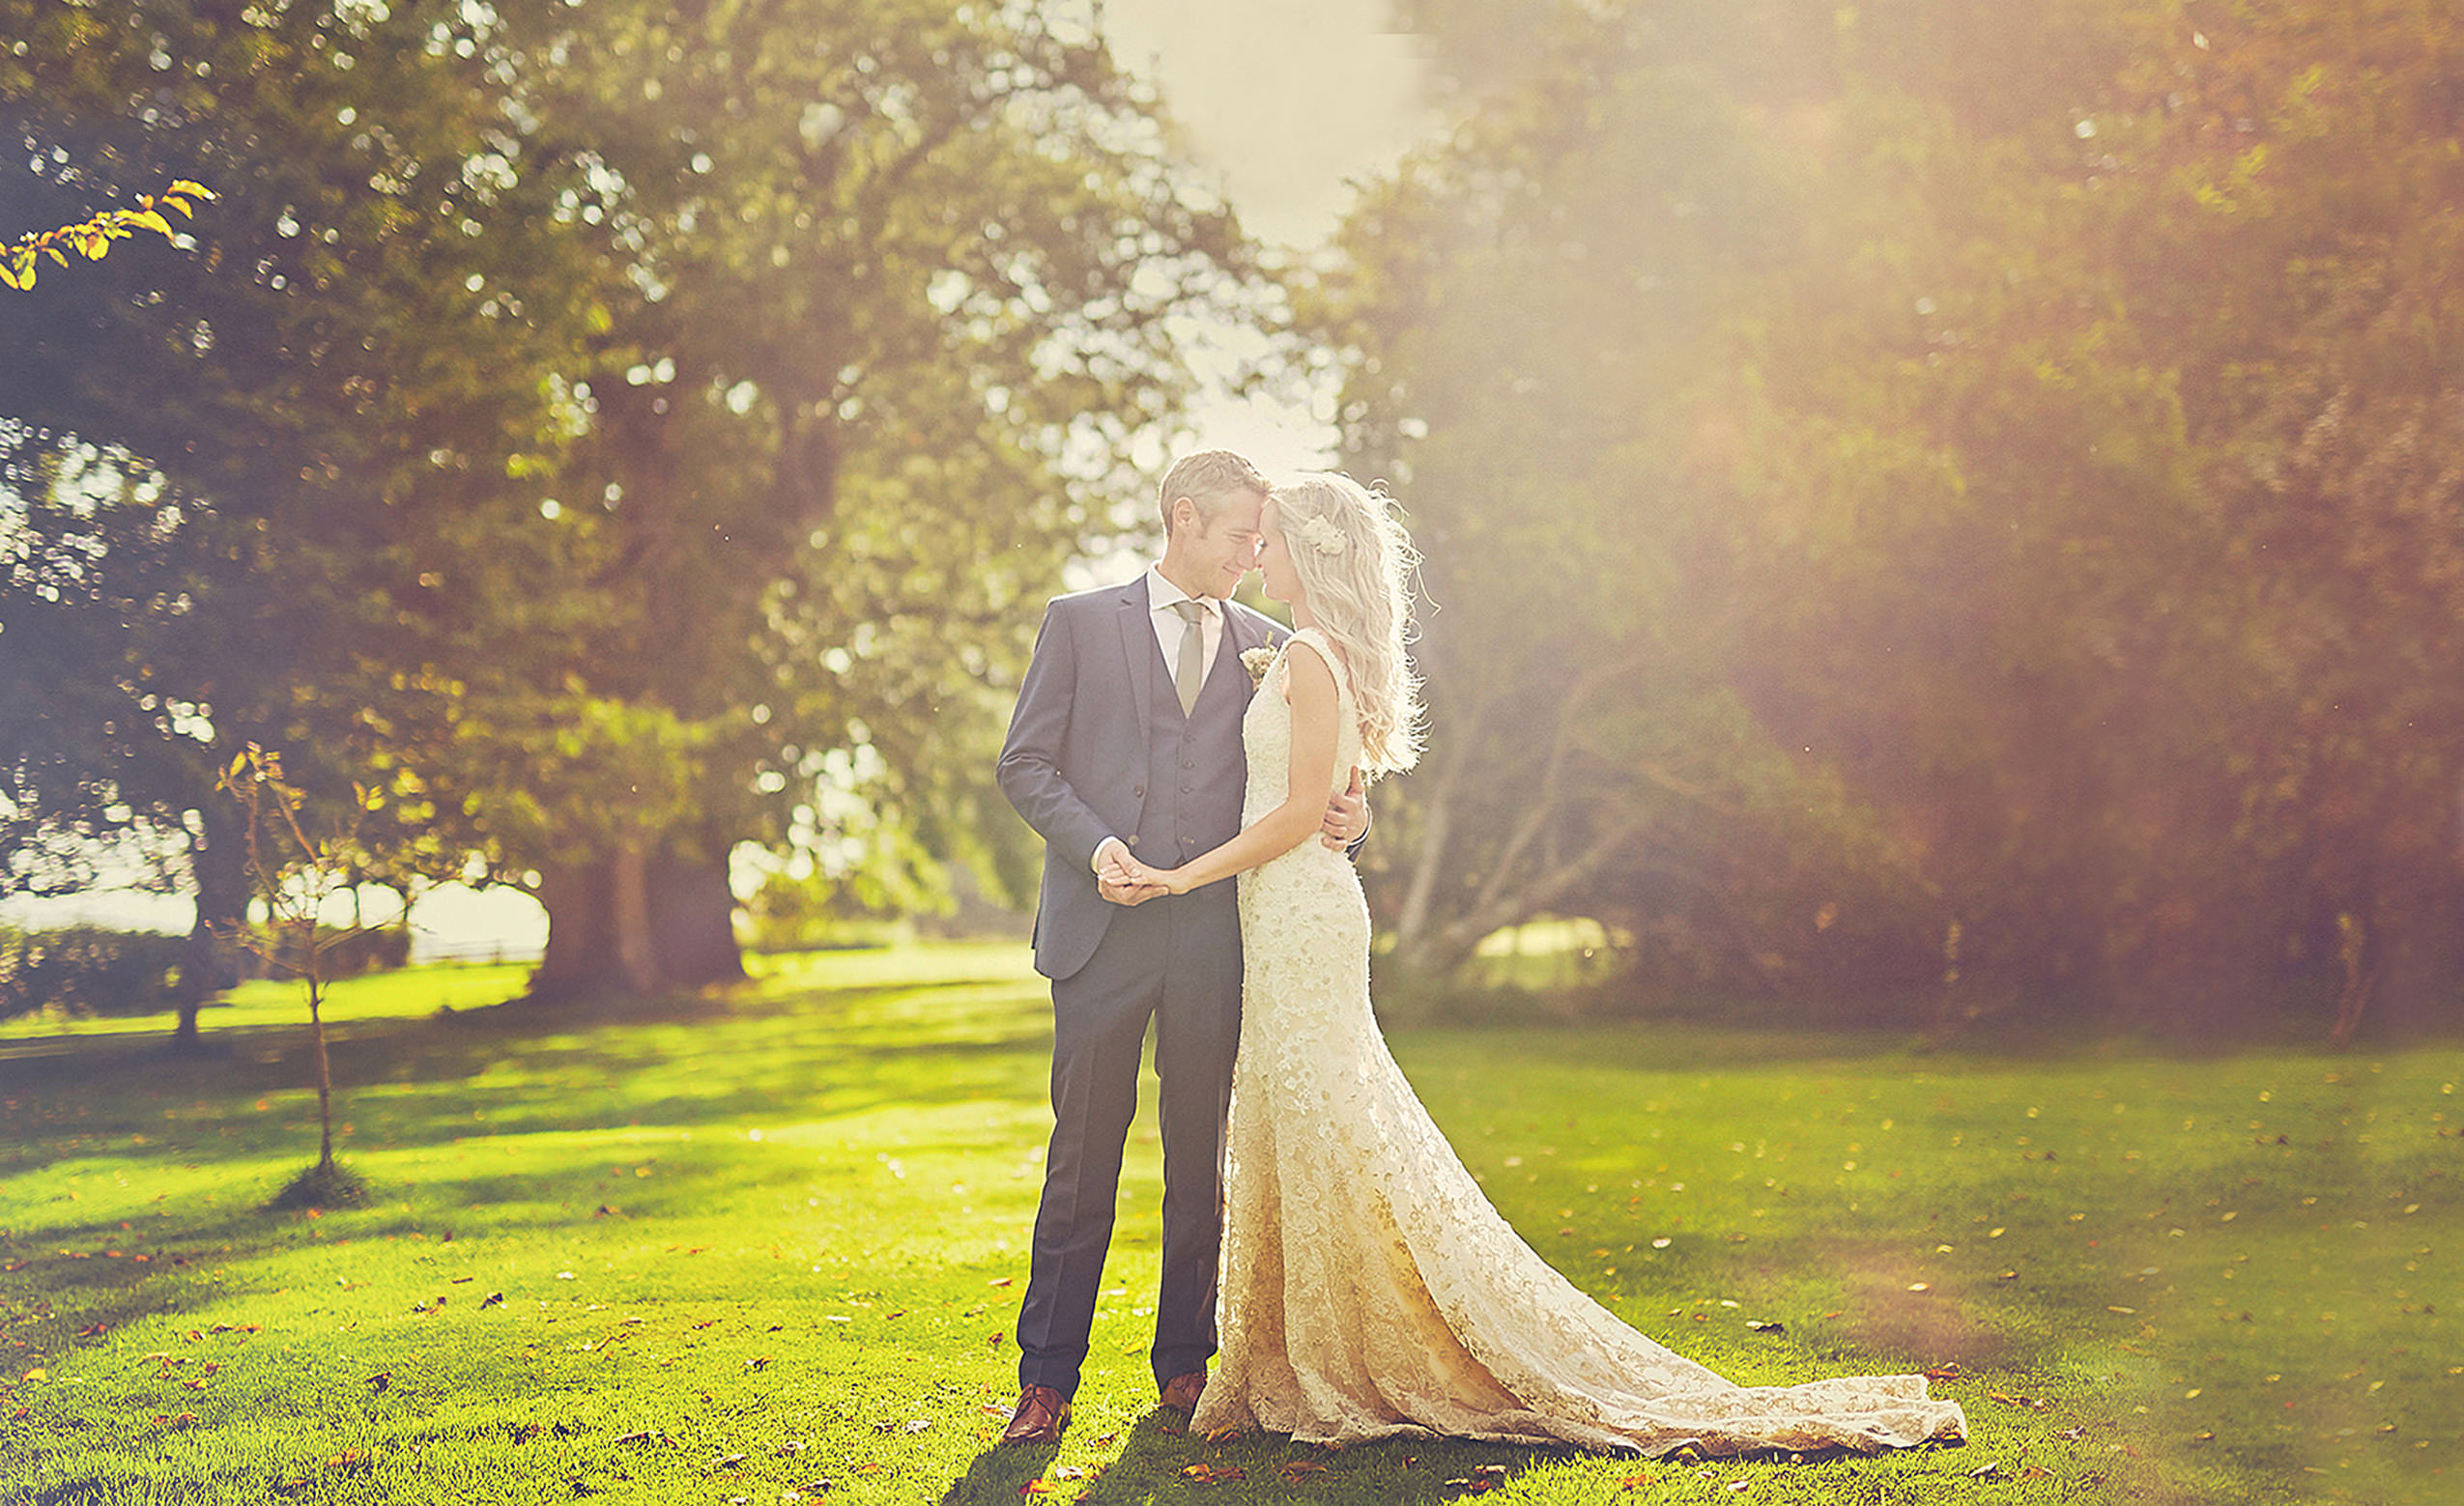 Wedding Photographer Dublin - DK Photography Ireland